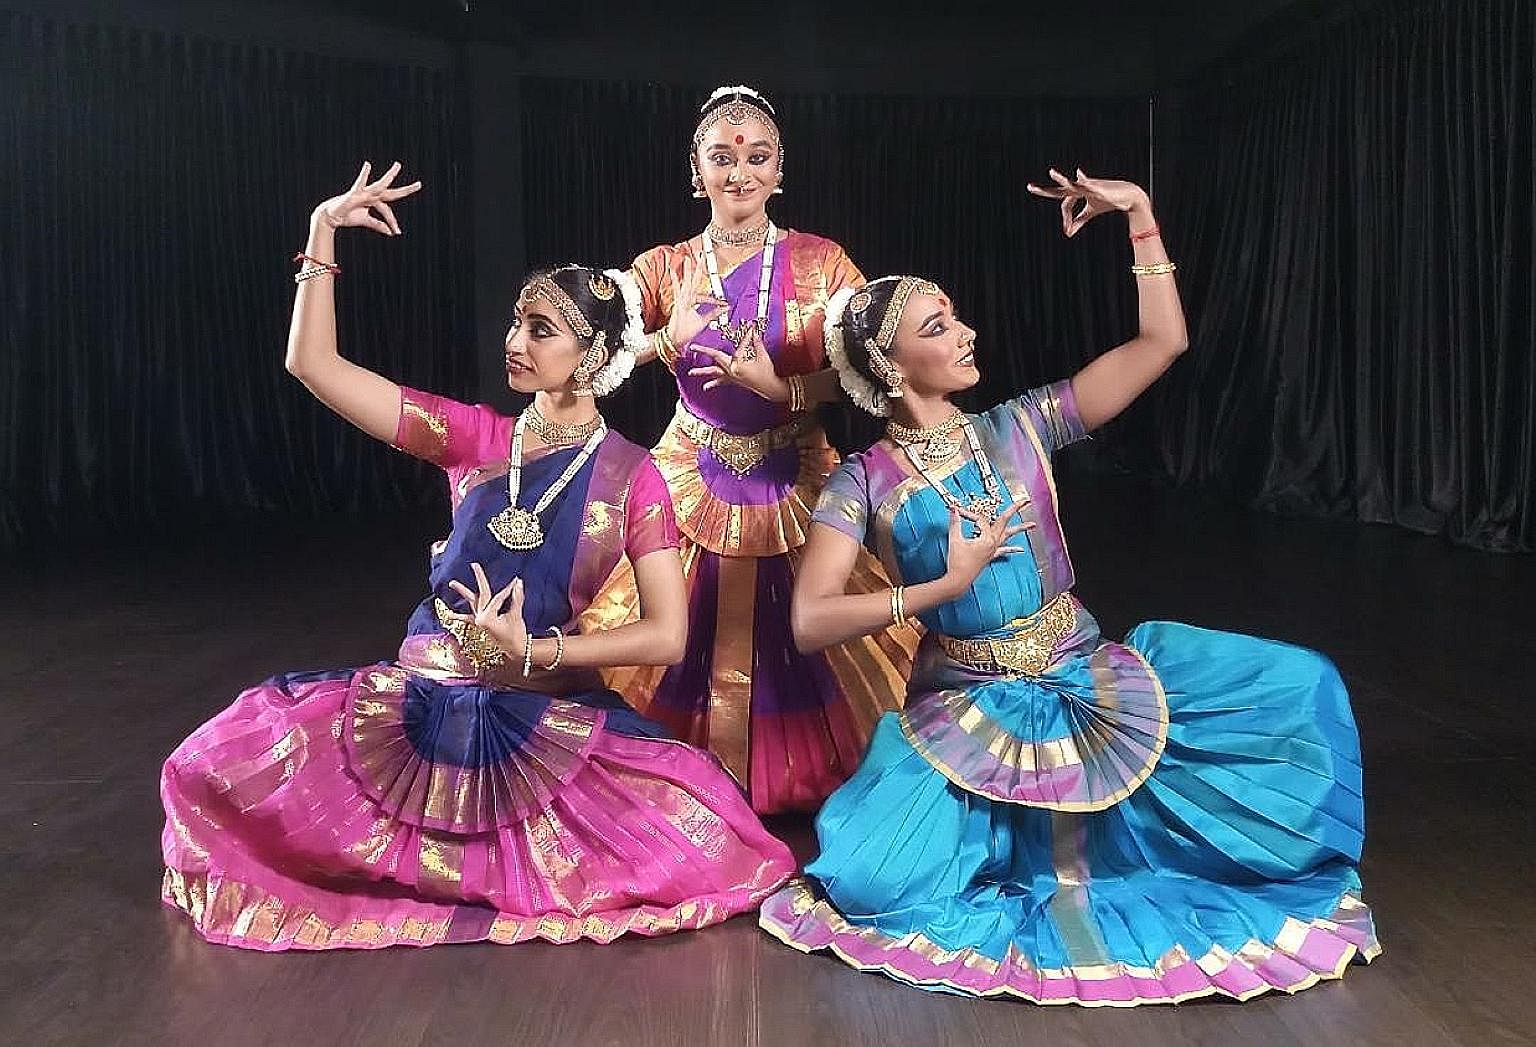 Dancers (from left) Priyadarshini Nagarajah, Davinya Ramathas and Sarenniya Ramathas perform Prati Sandhi (Reunion), which is inspired by the classic Hindu scripture, the Bhagavad Gita.